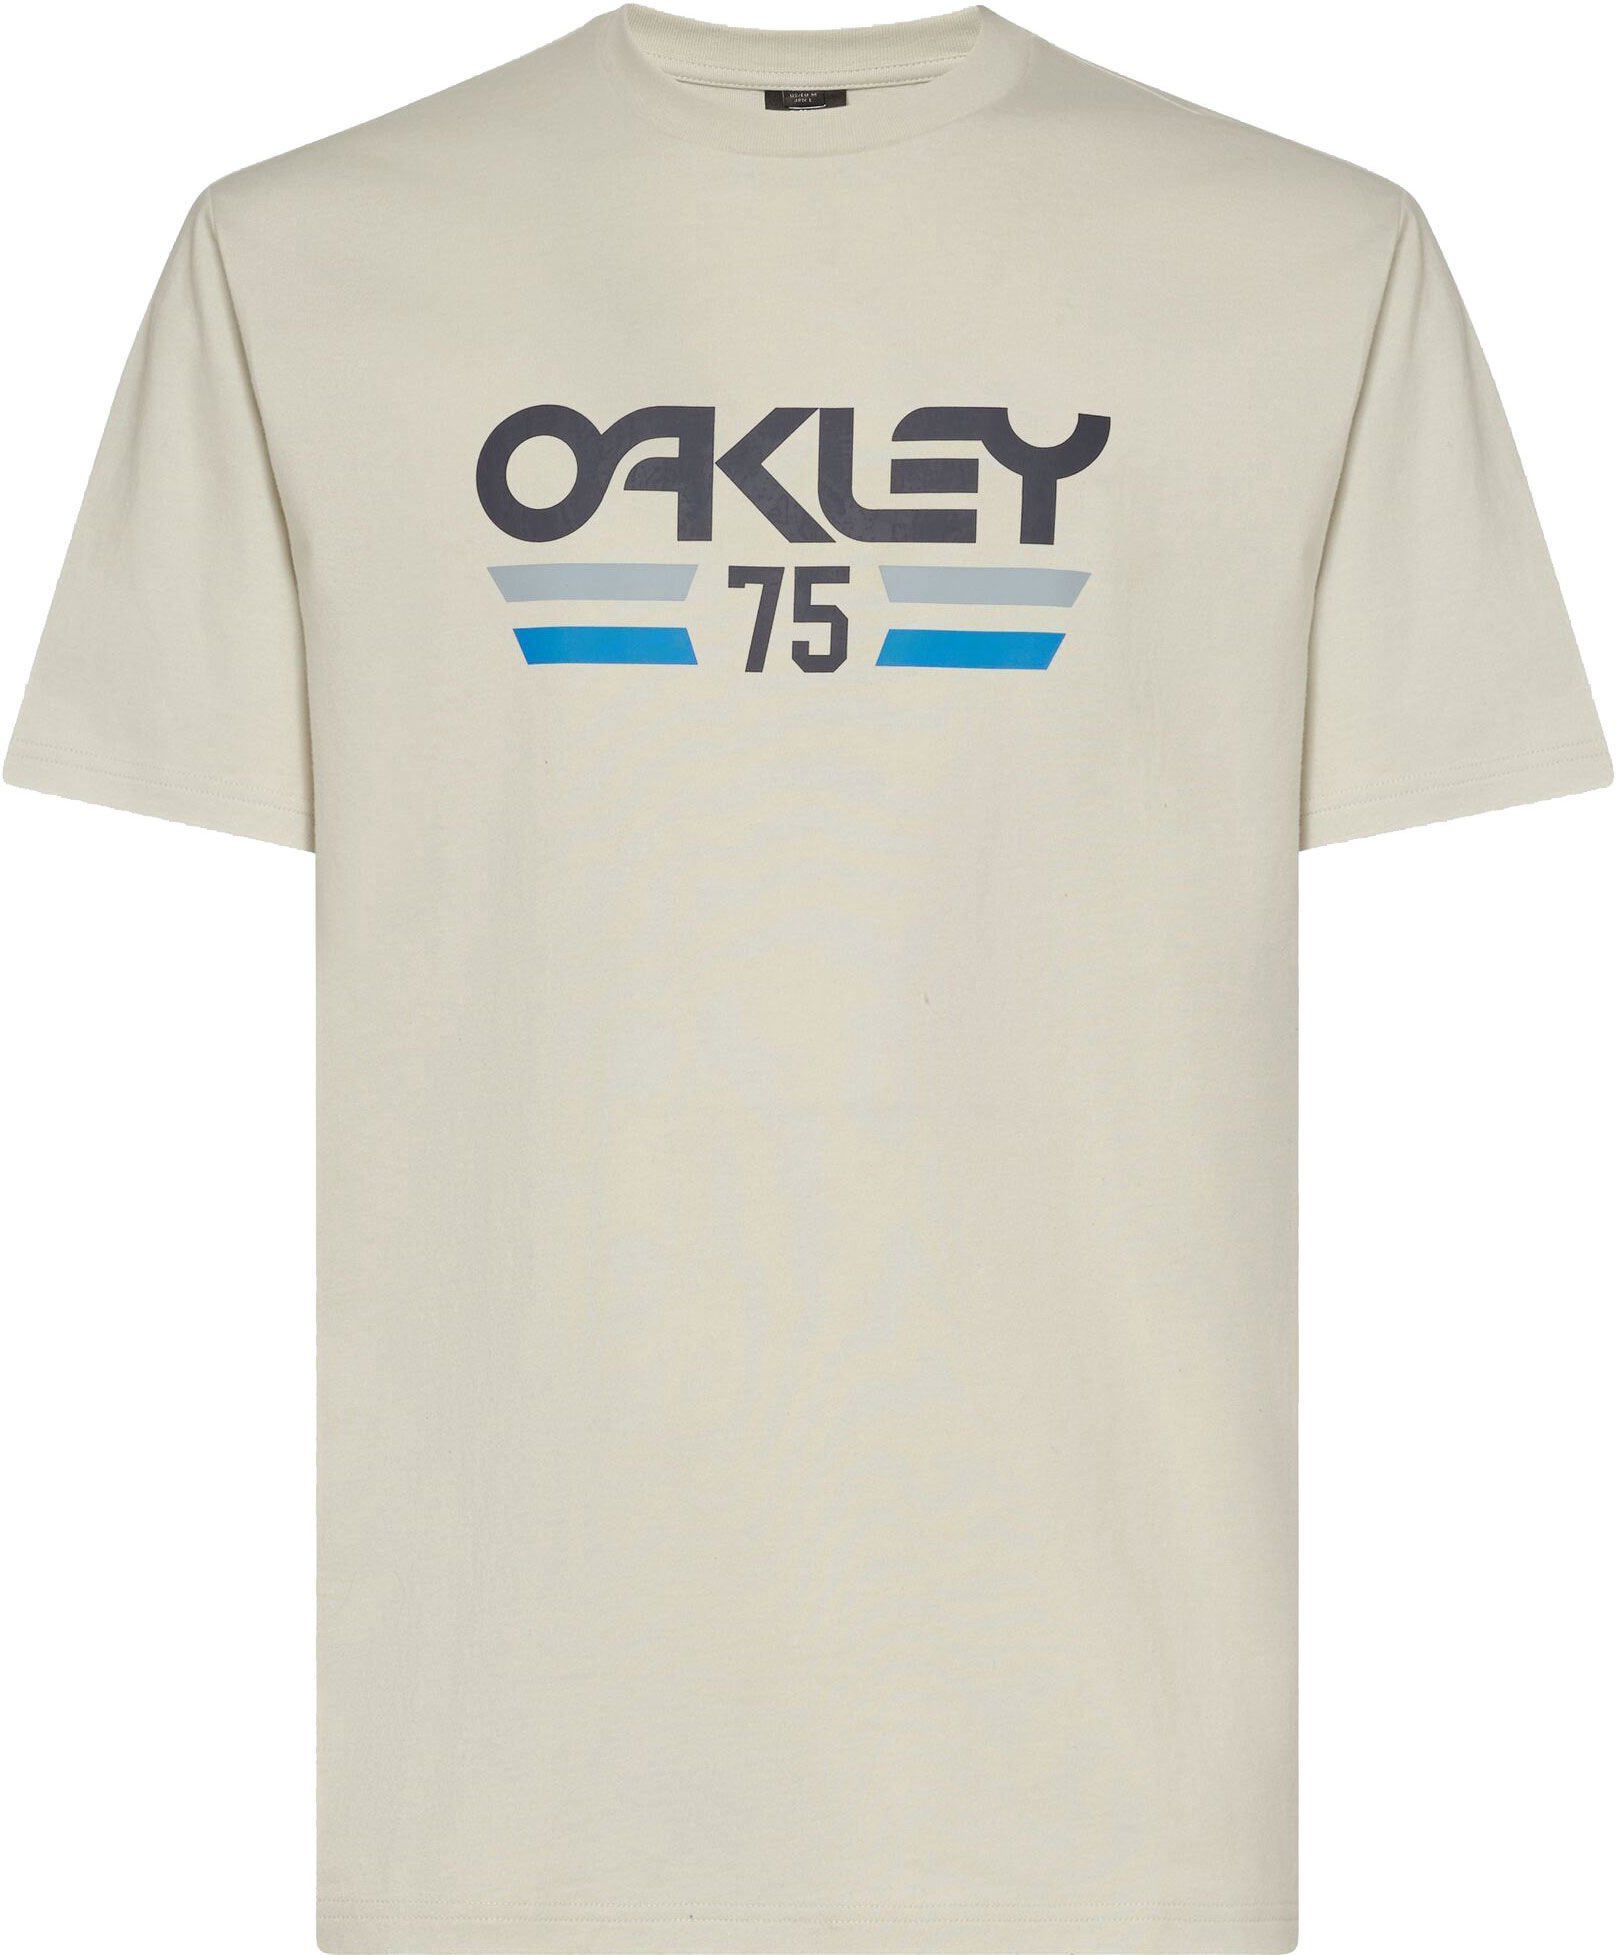 Oakley Vista 1975